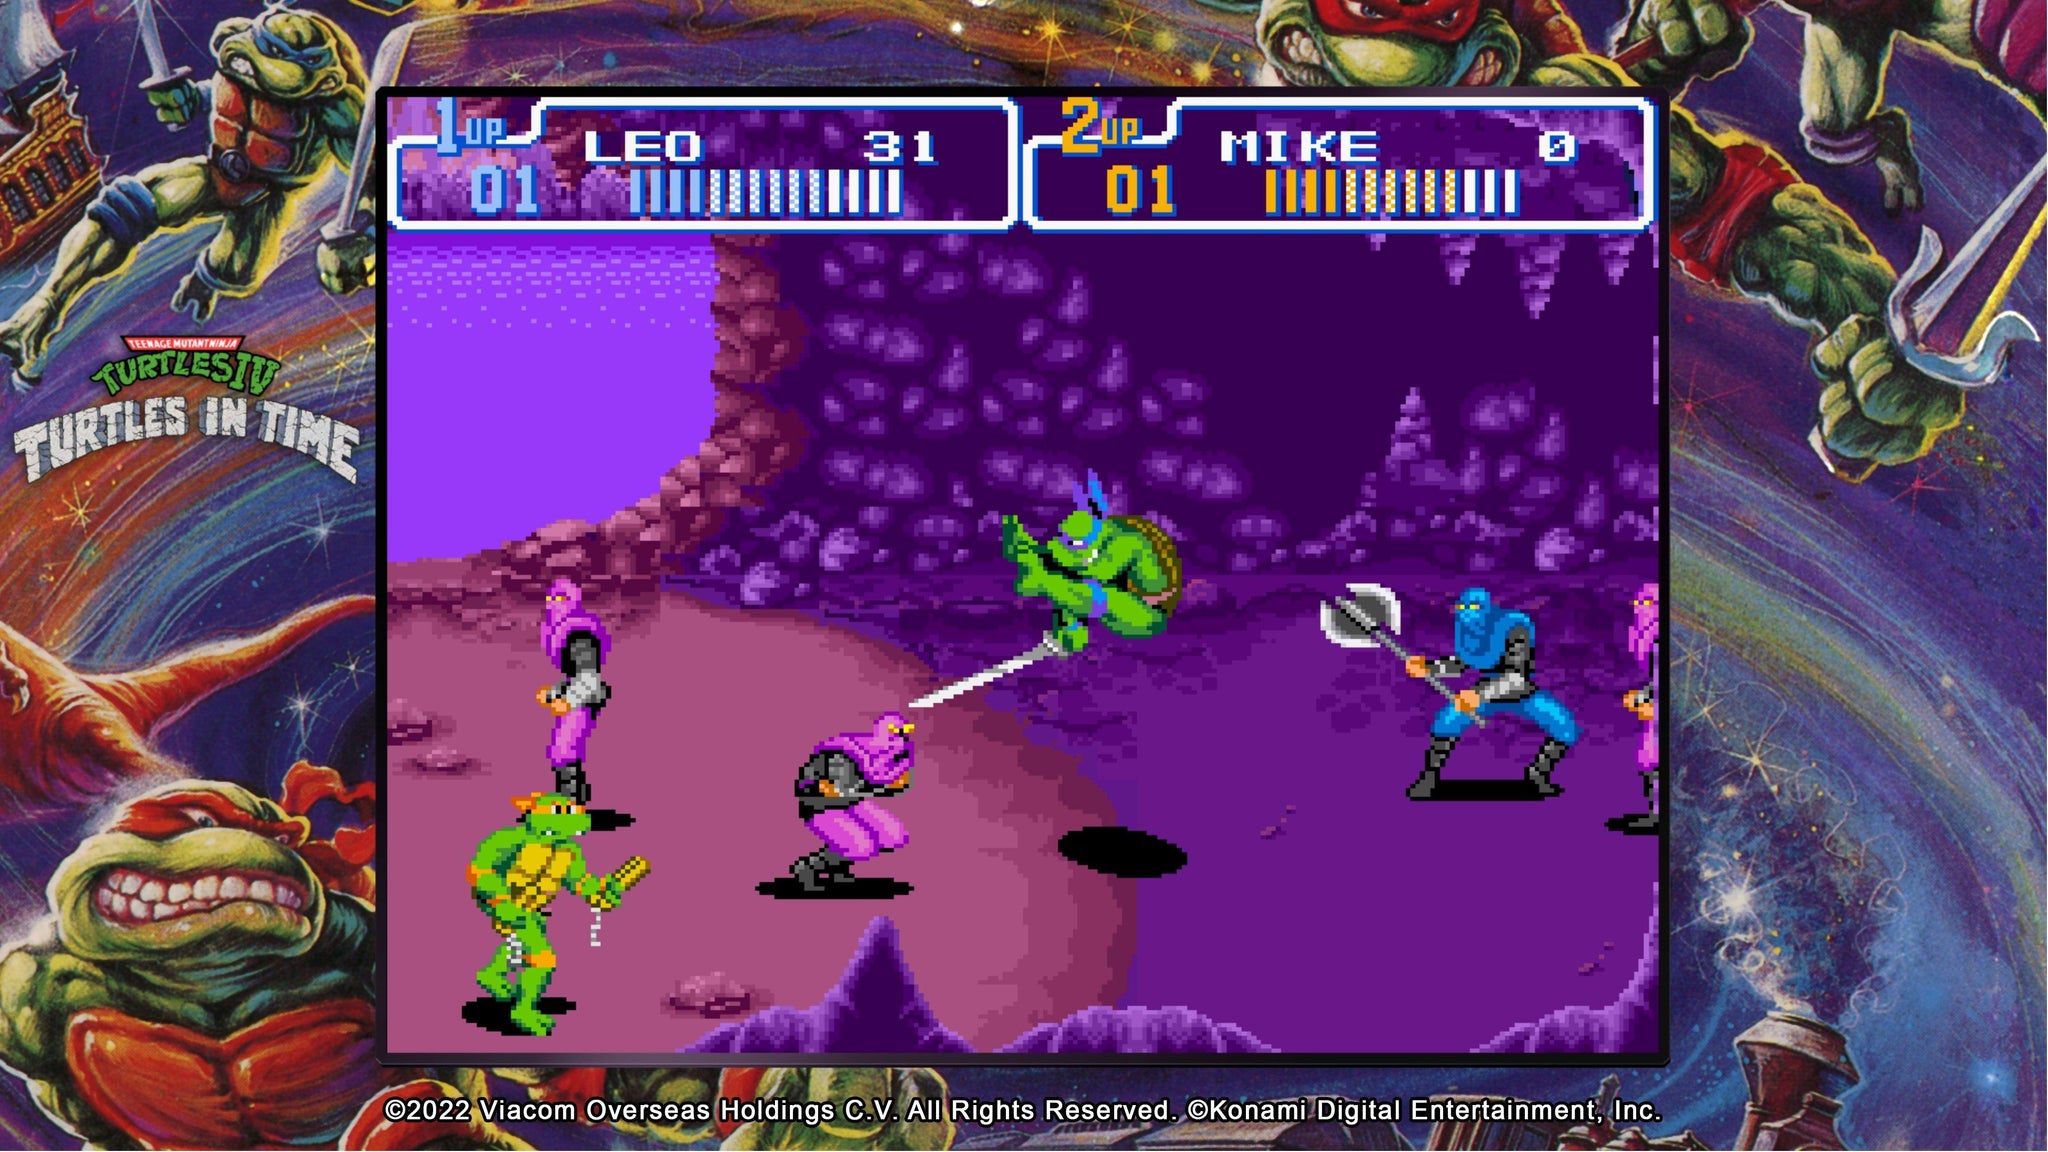 Video Mutant Cybertron Ninja Games – Turtles: Collection Cowabunga Teenage The